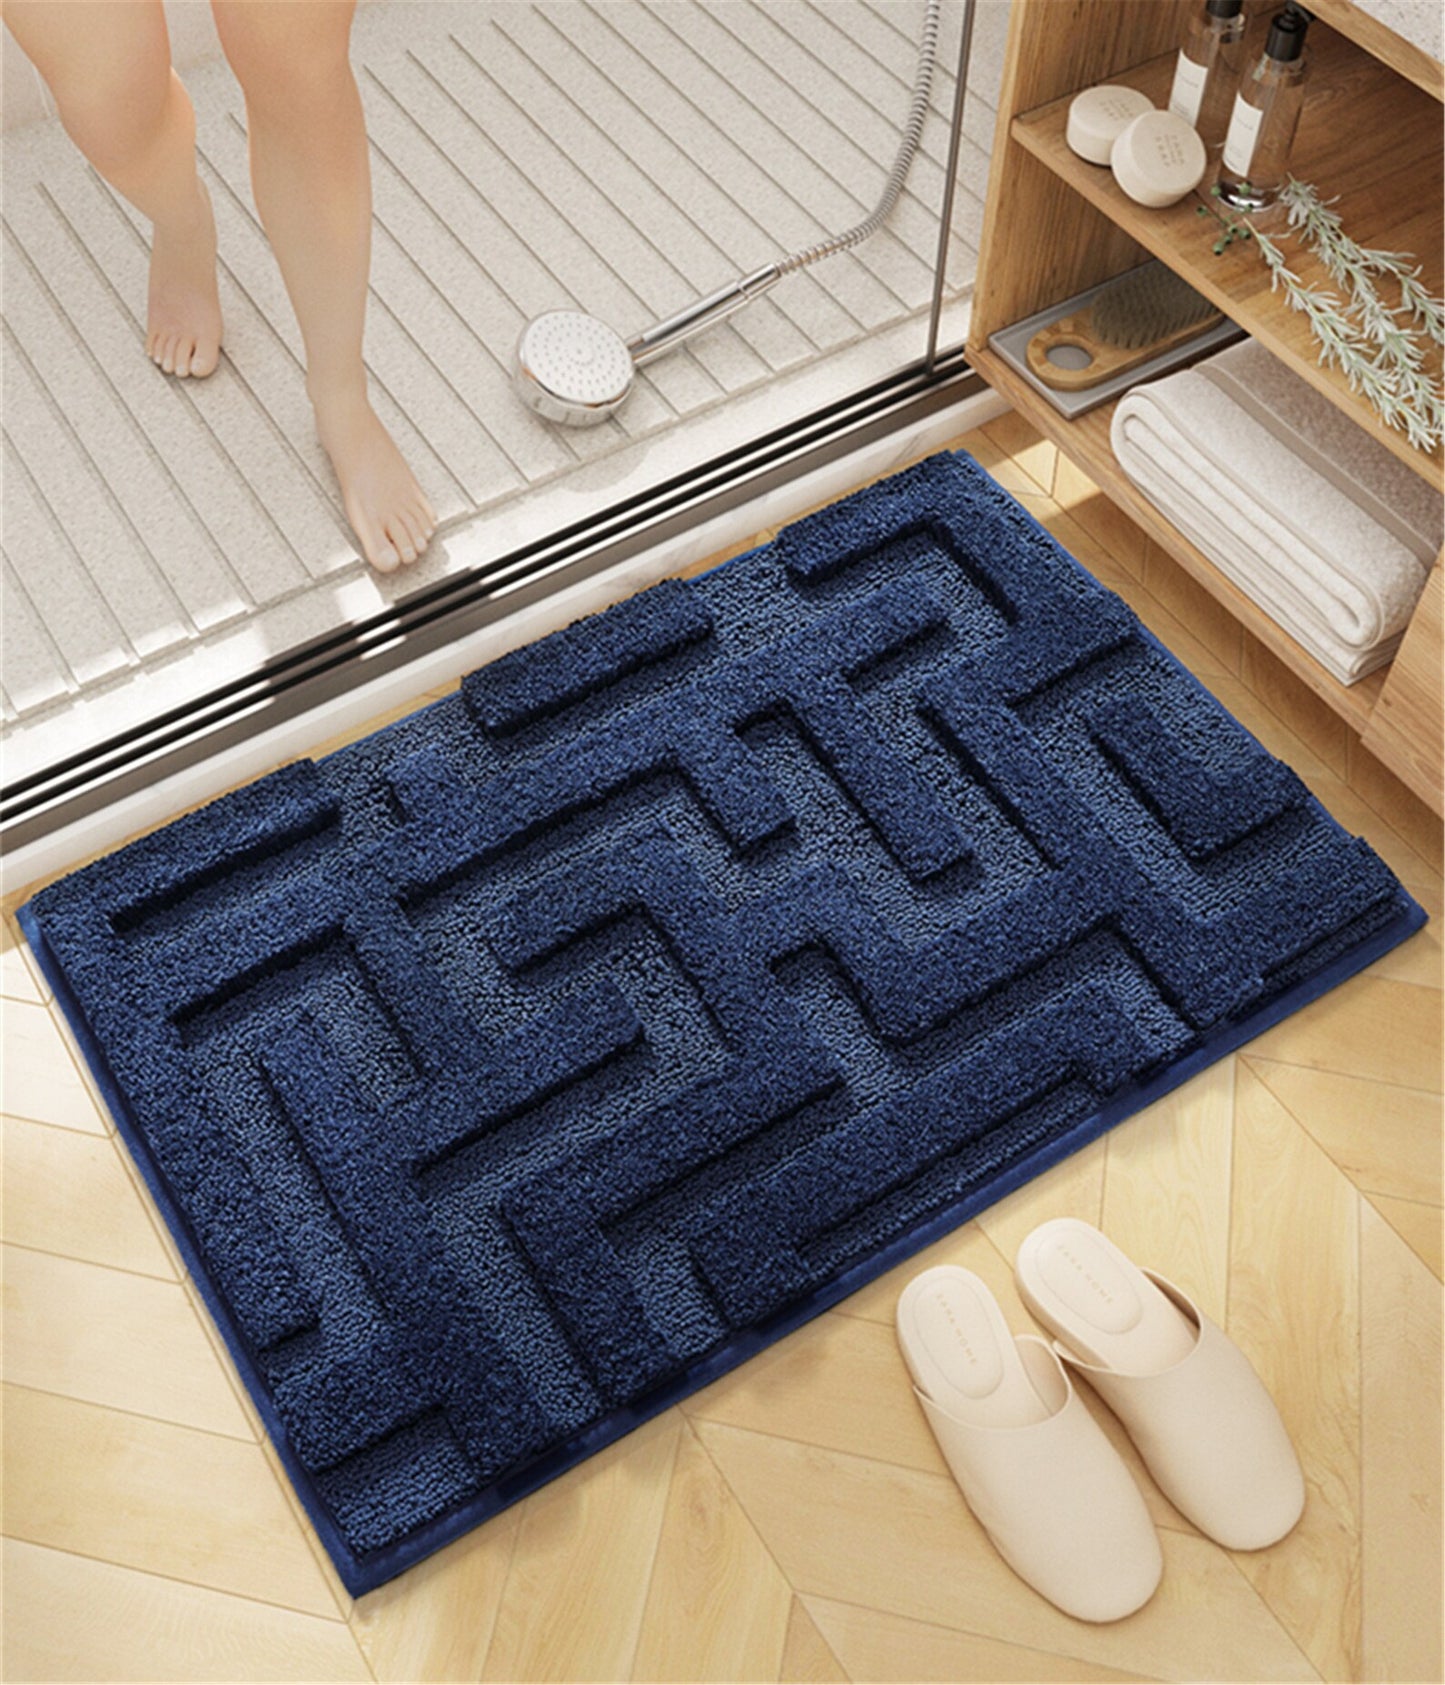 Feblilac Solid Color Tufted Bath Mat, Geometric Patterns Bathroom Rug